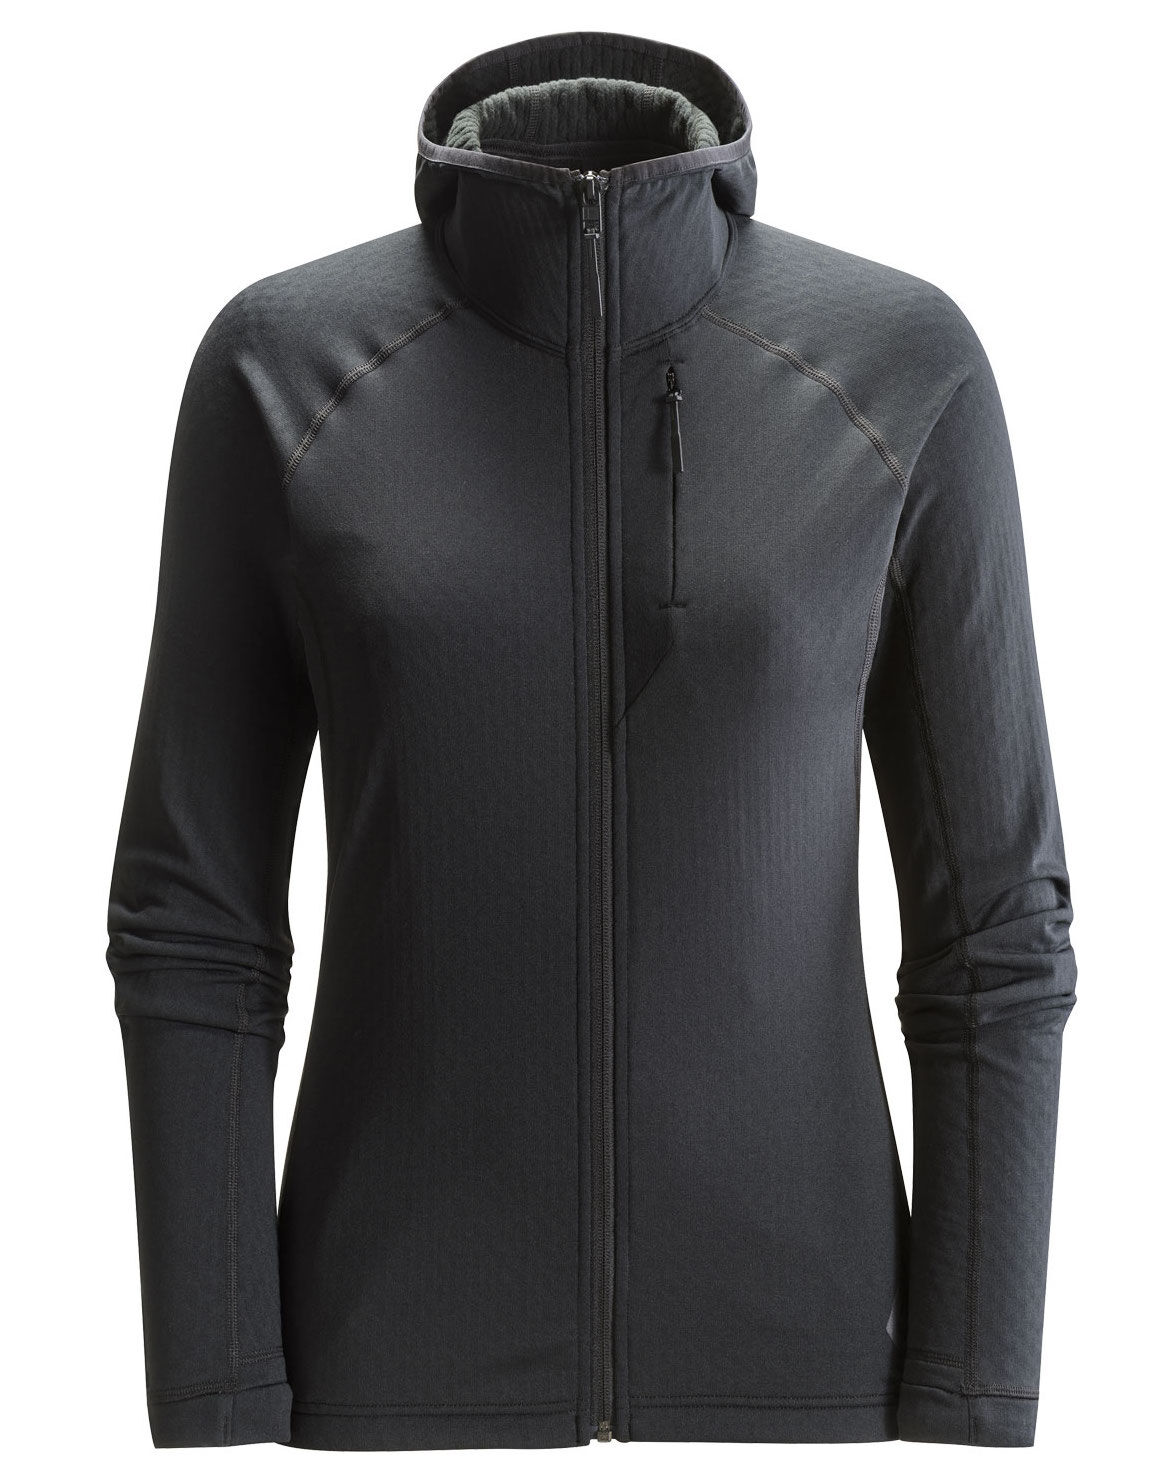 Black Diamond - Coefficient Jacket Hoody - Fleece jacket - Women's